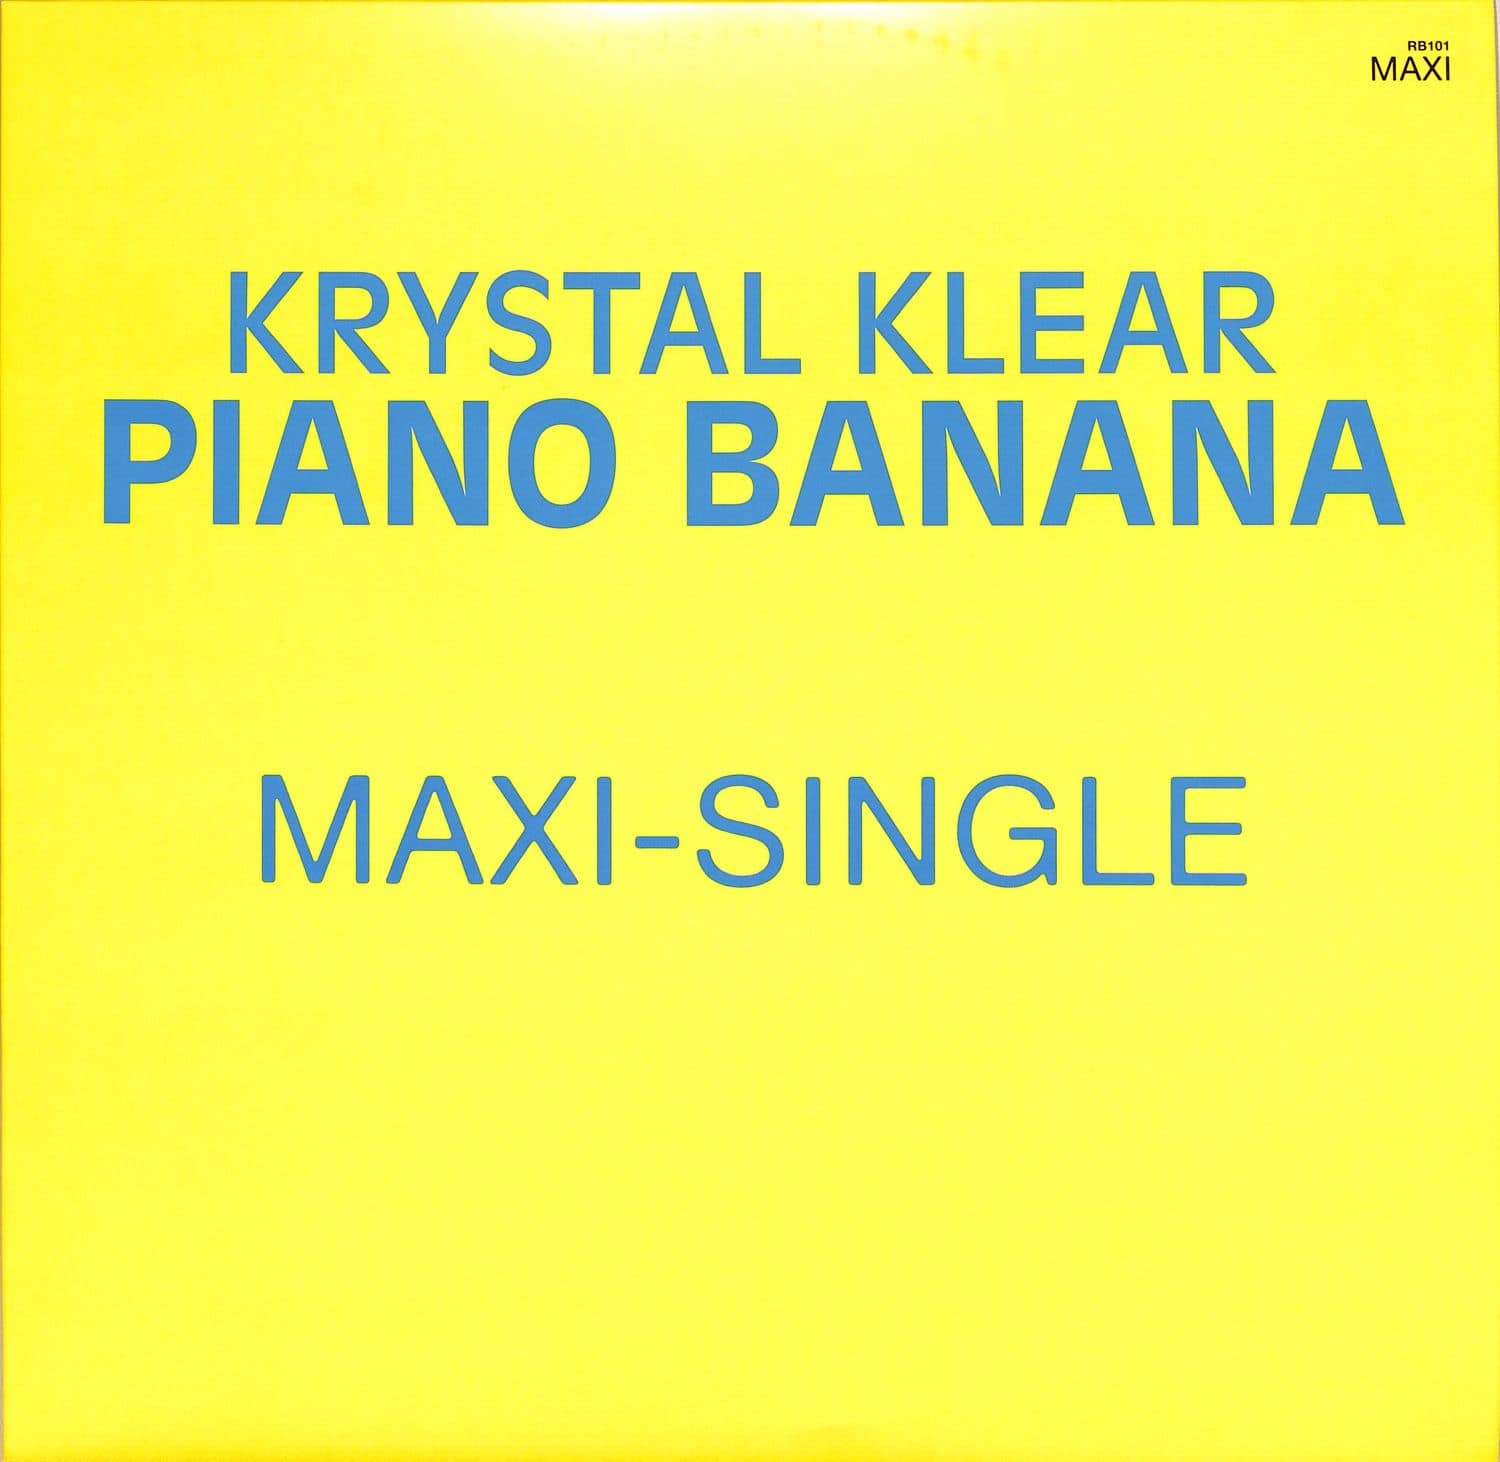 Krystal Klear - PIANO BANANA